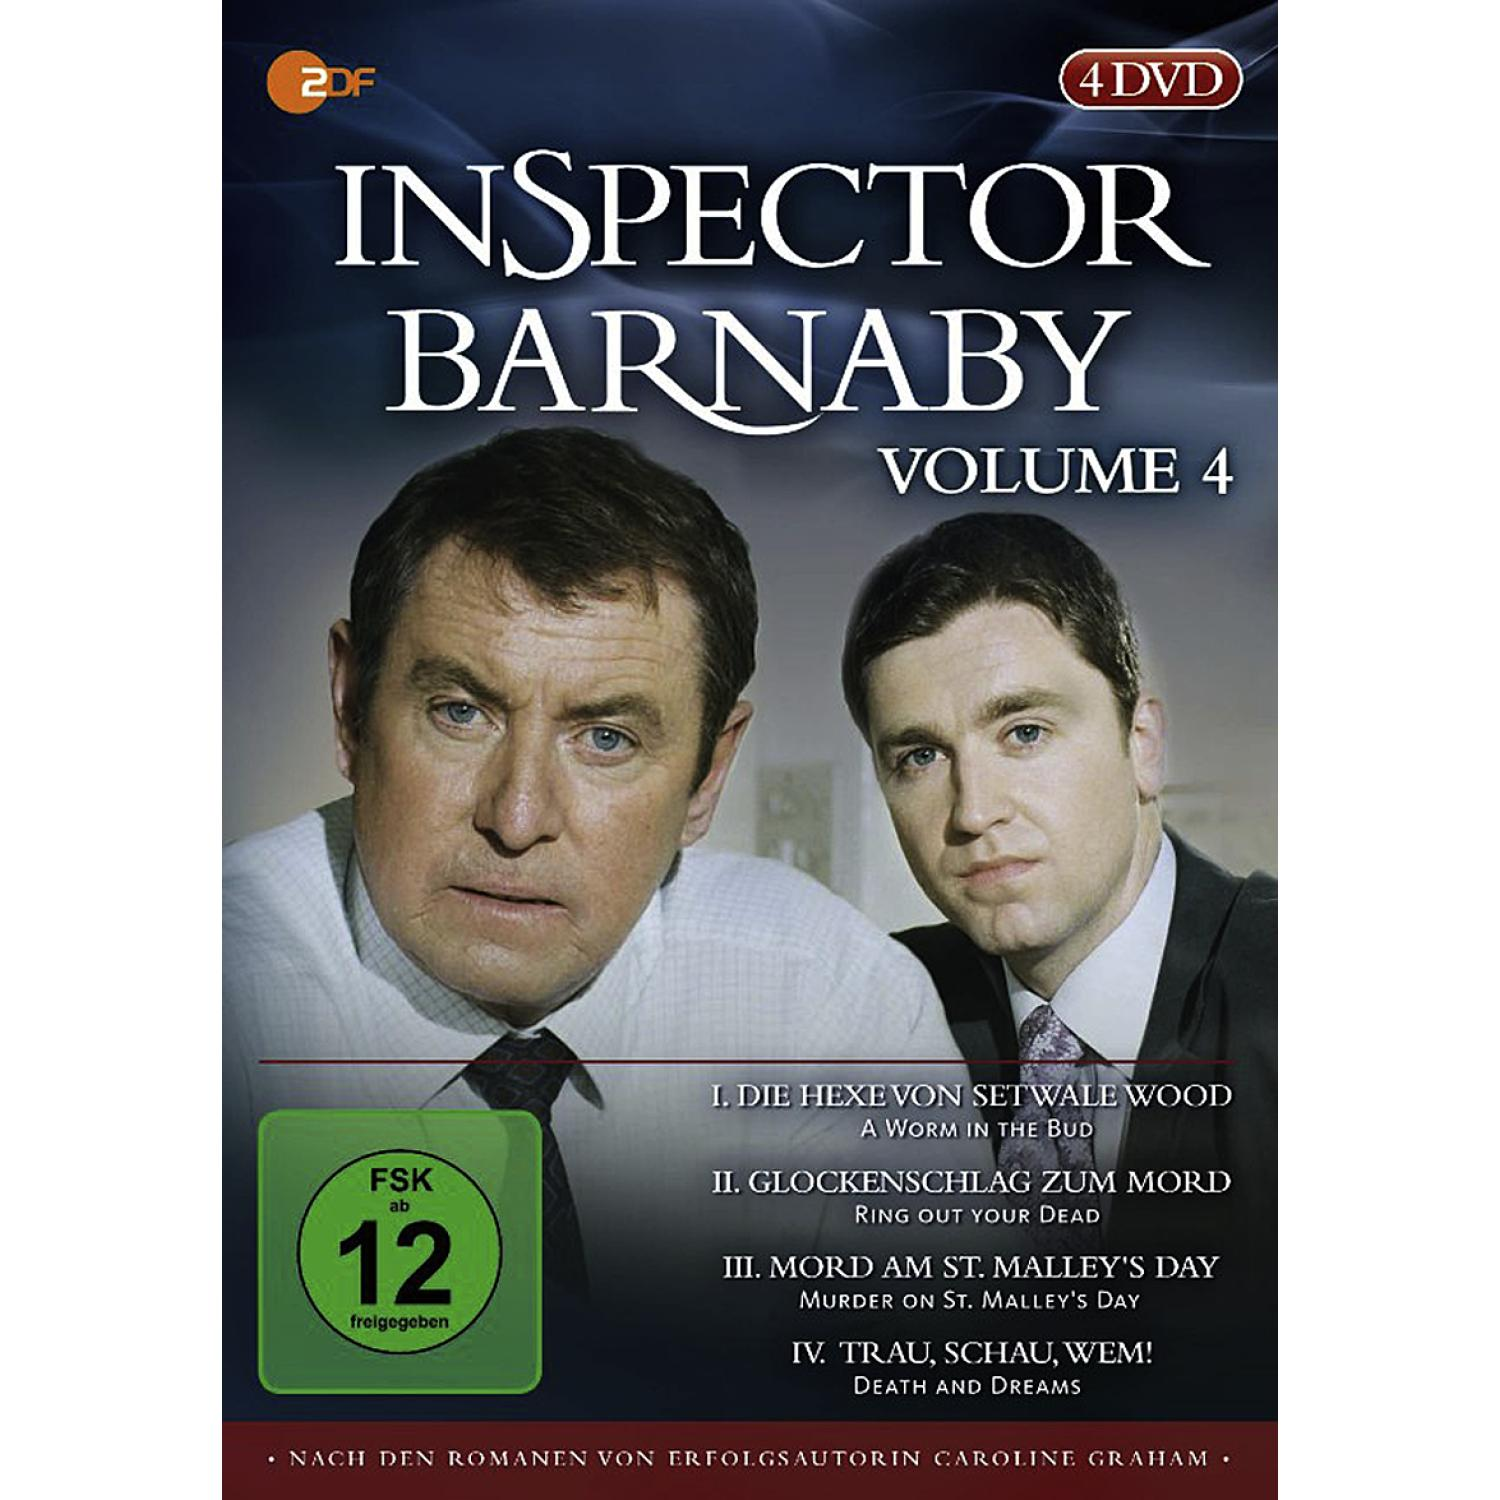 DVD Inspector Volume 4 - Barnaby